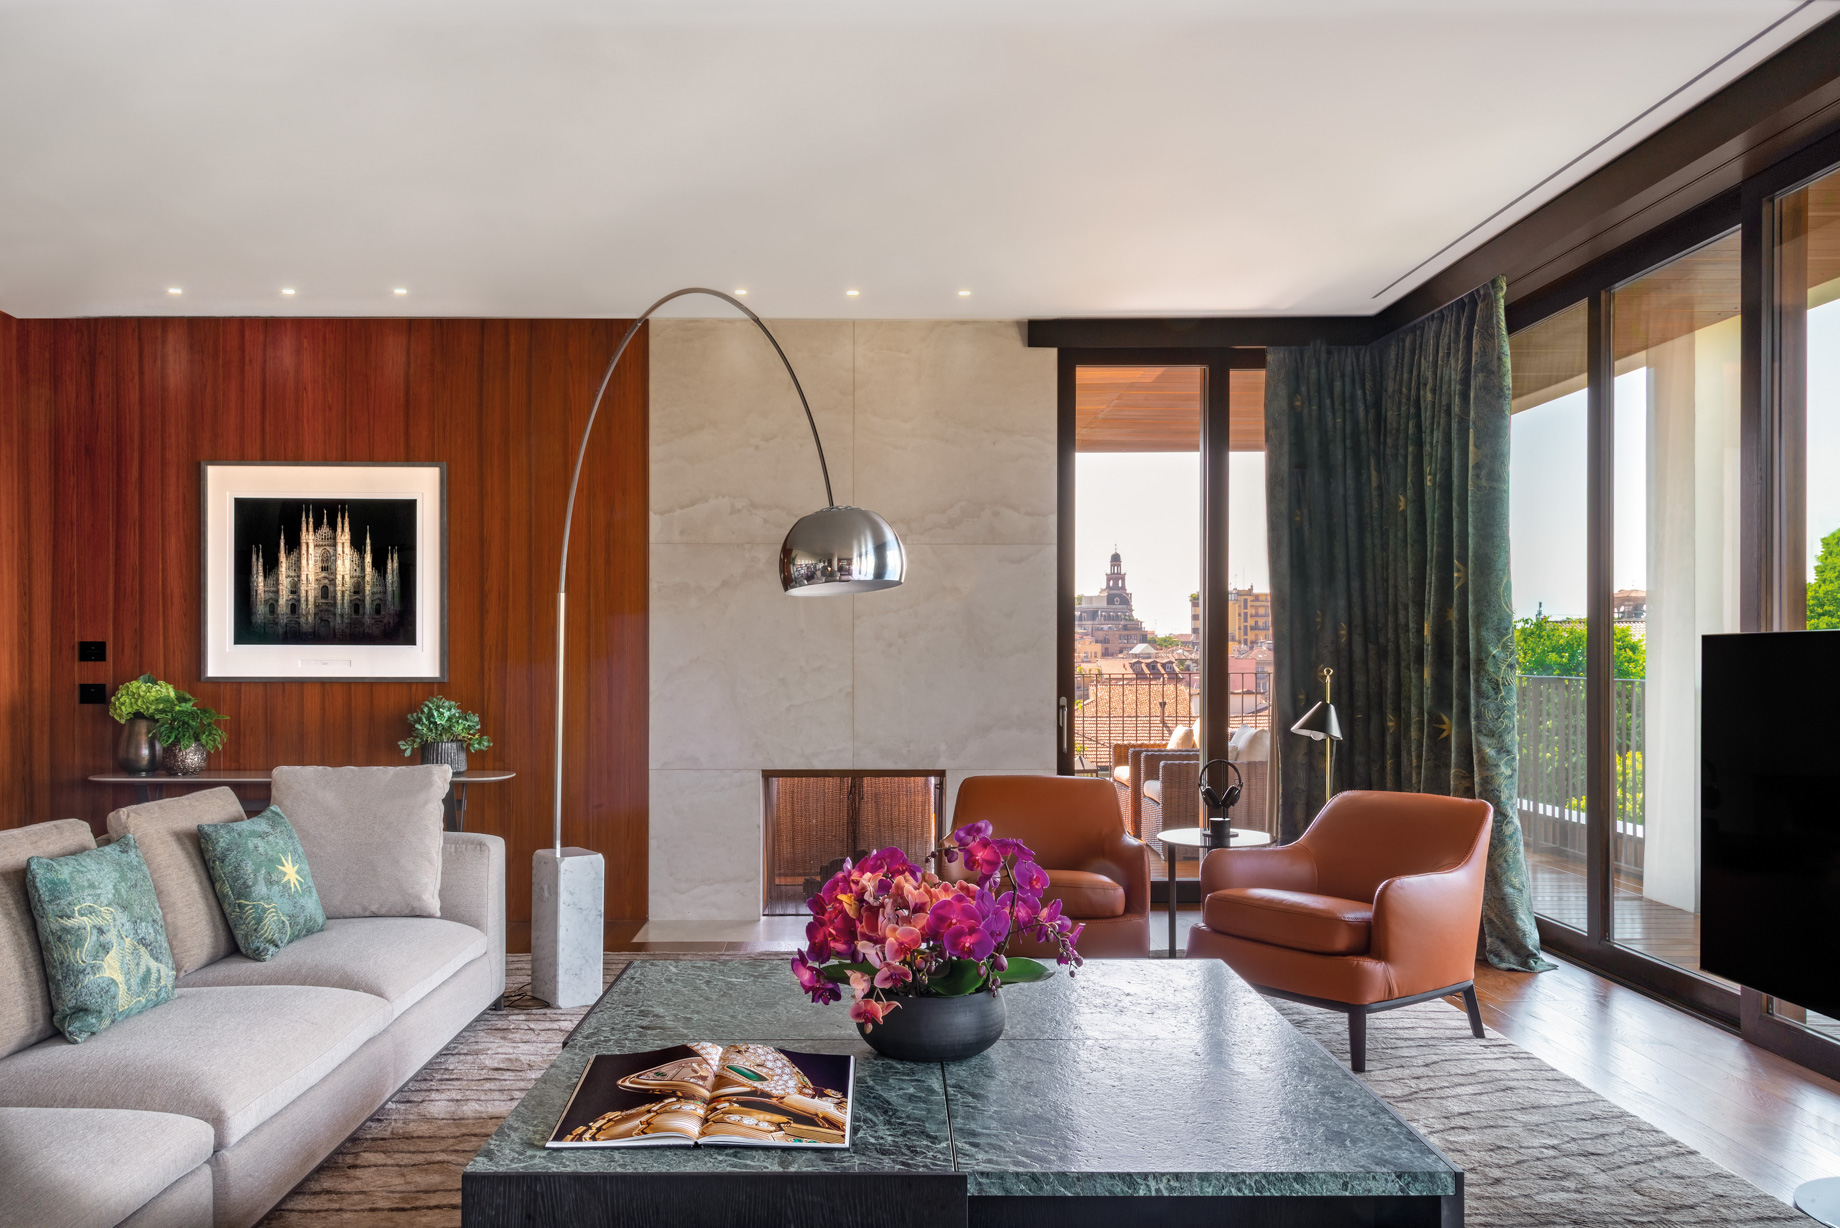 Bvlgari Hotel Milano – Milan, Italy – Bvlgari Suite Living Room